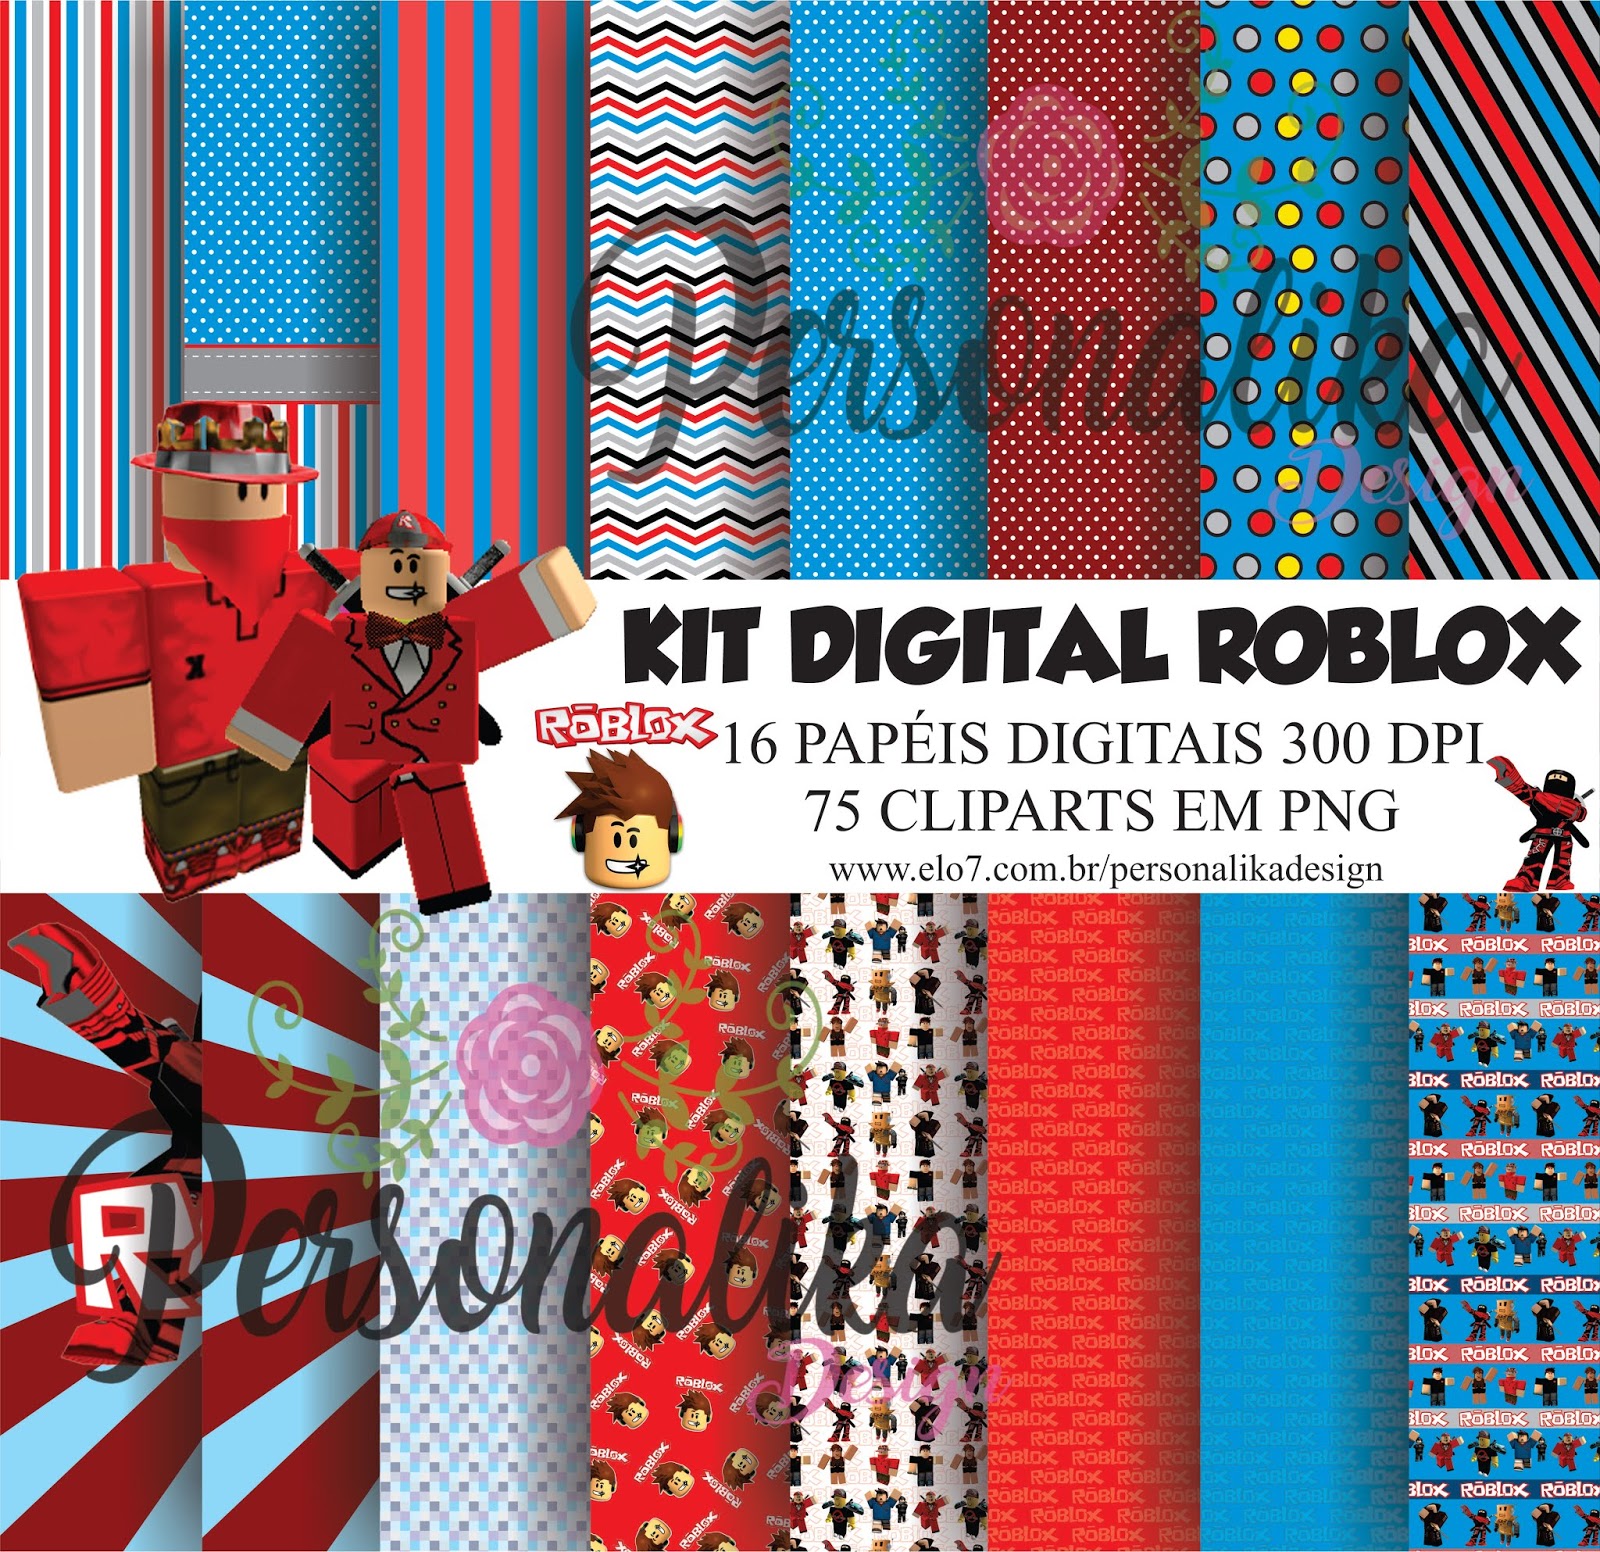 KIT DIGITAL ROBLOX - PREMIUM - Arte Digital Grátis